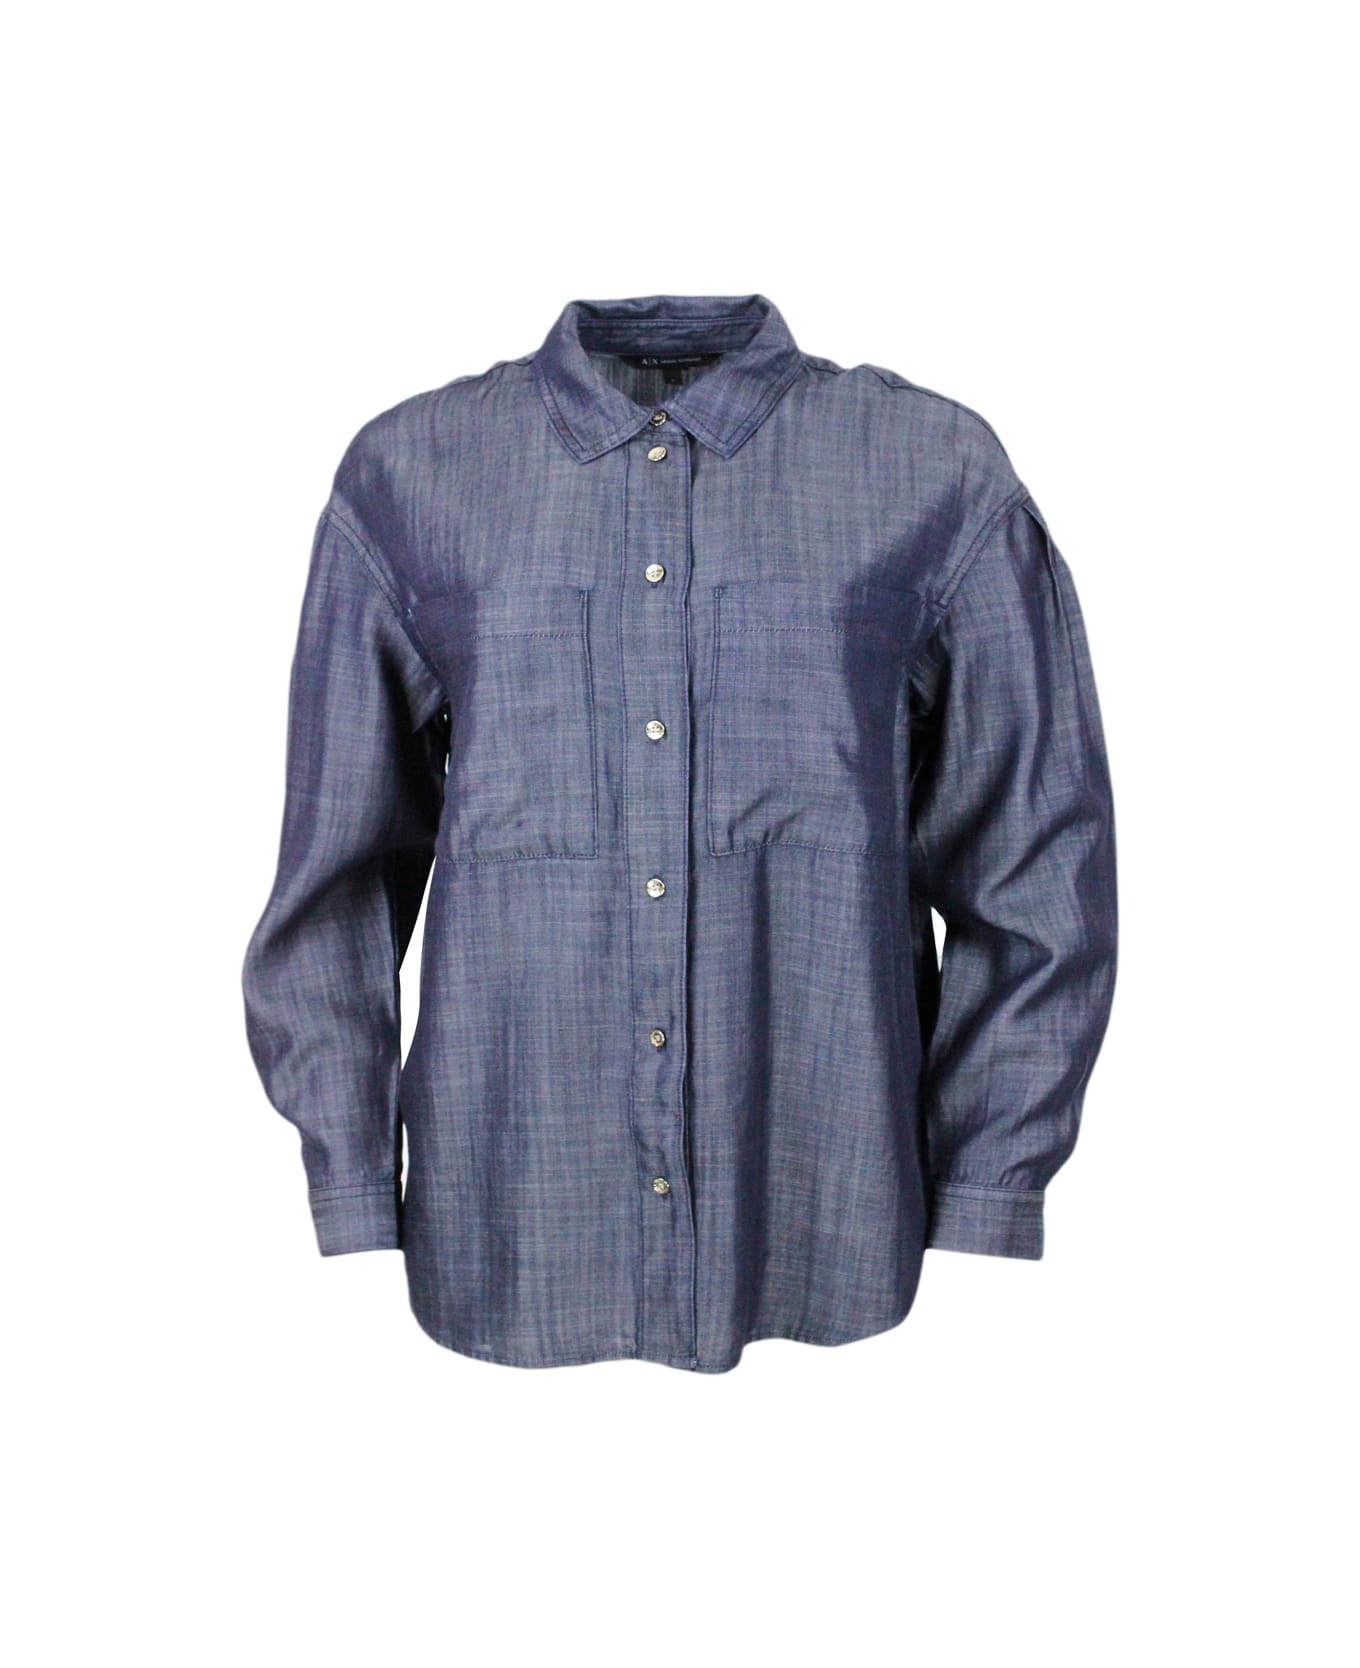 Armani Collezioni Lightweight Long-sleeved Denim Shirt With Chest Pockets And Button Closure - Denim Dark